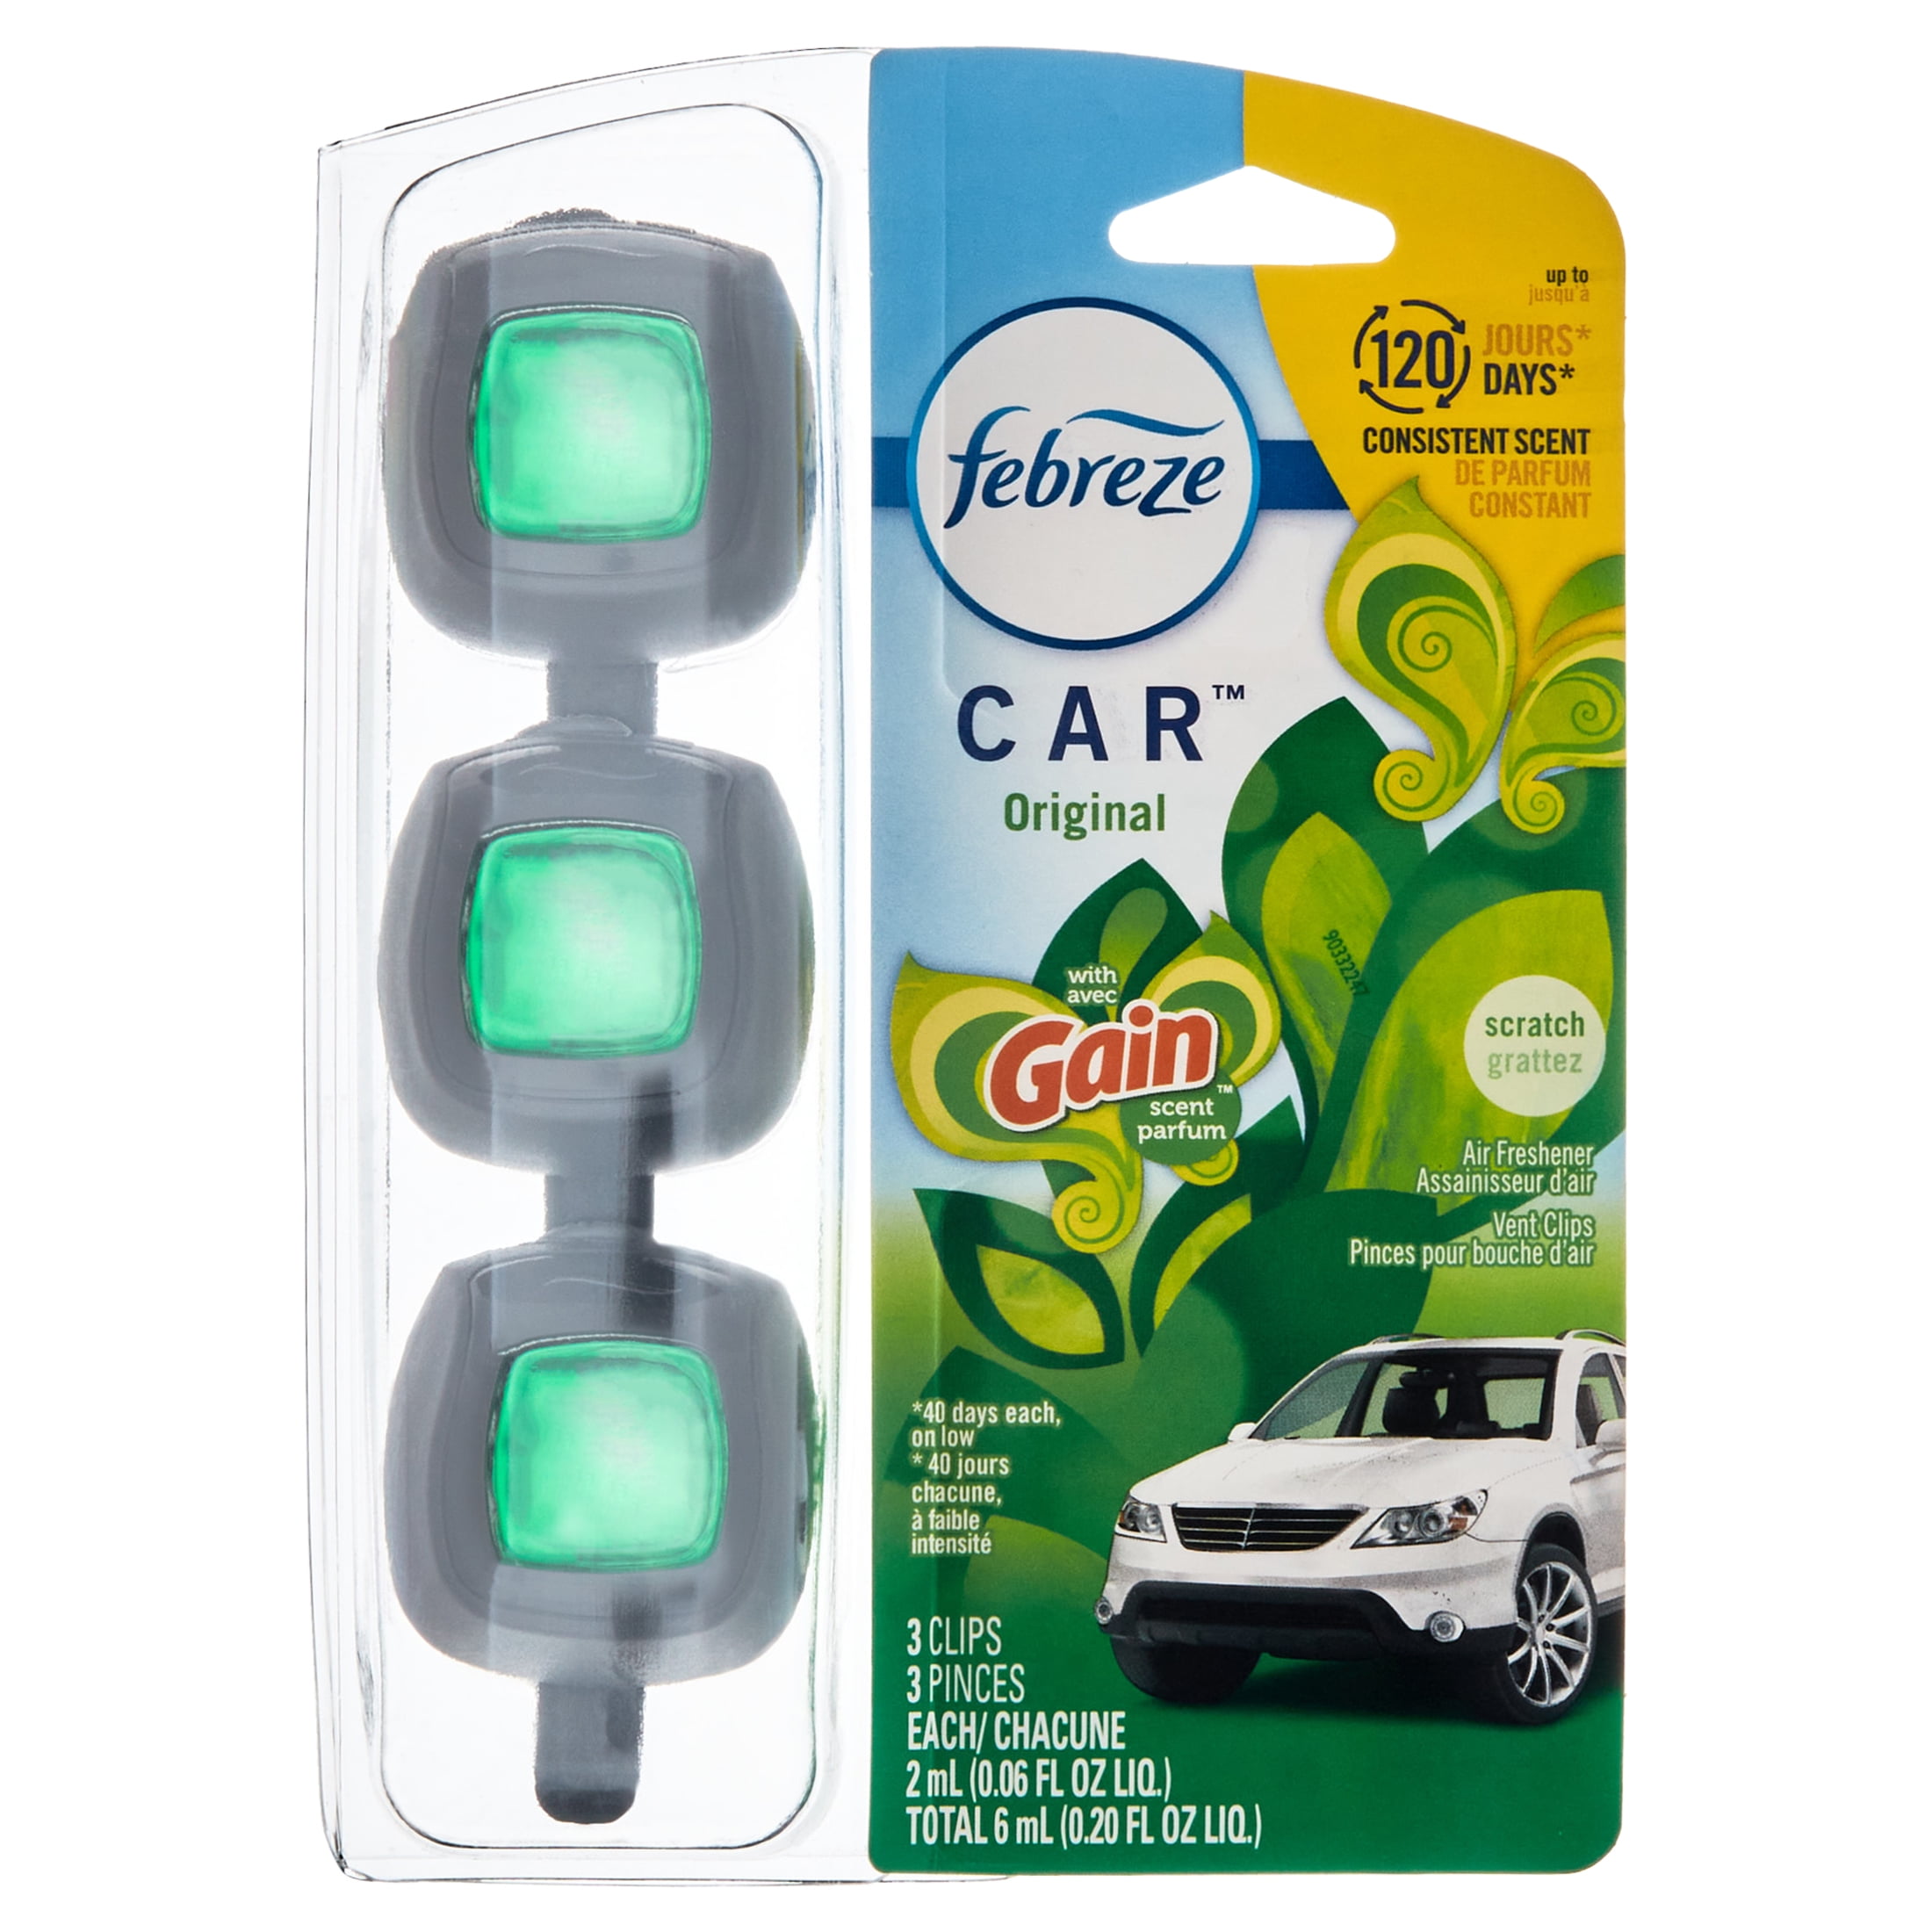 Febreze Car Odor-Fighting Car Freshener Vent Clip Gain Original Scent